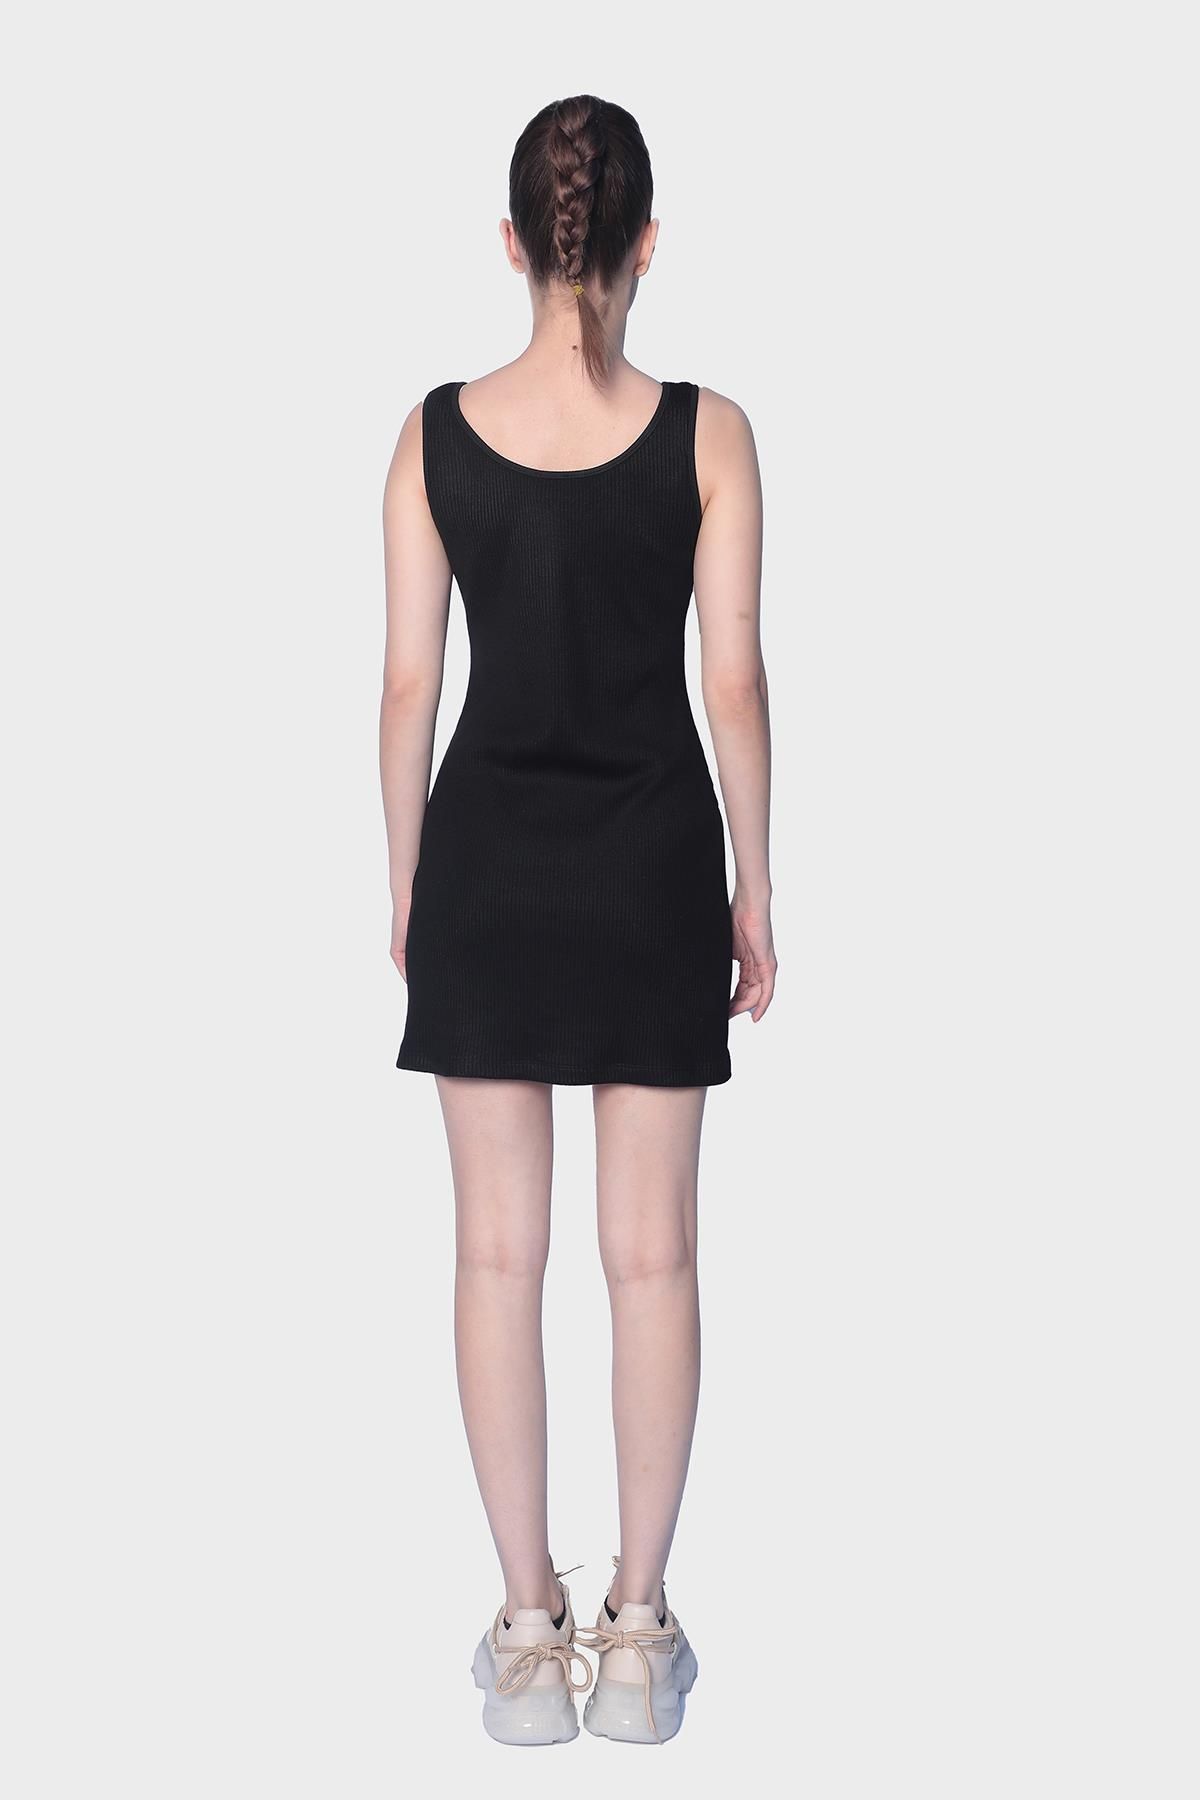 Black Square Neckline Fitted Acrylic Fabric Mini Dress